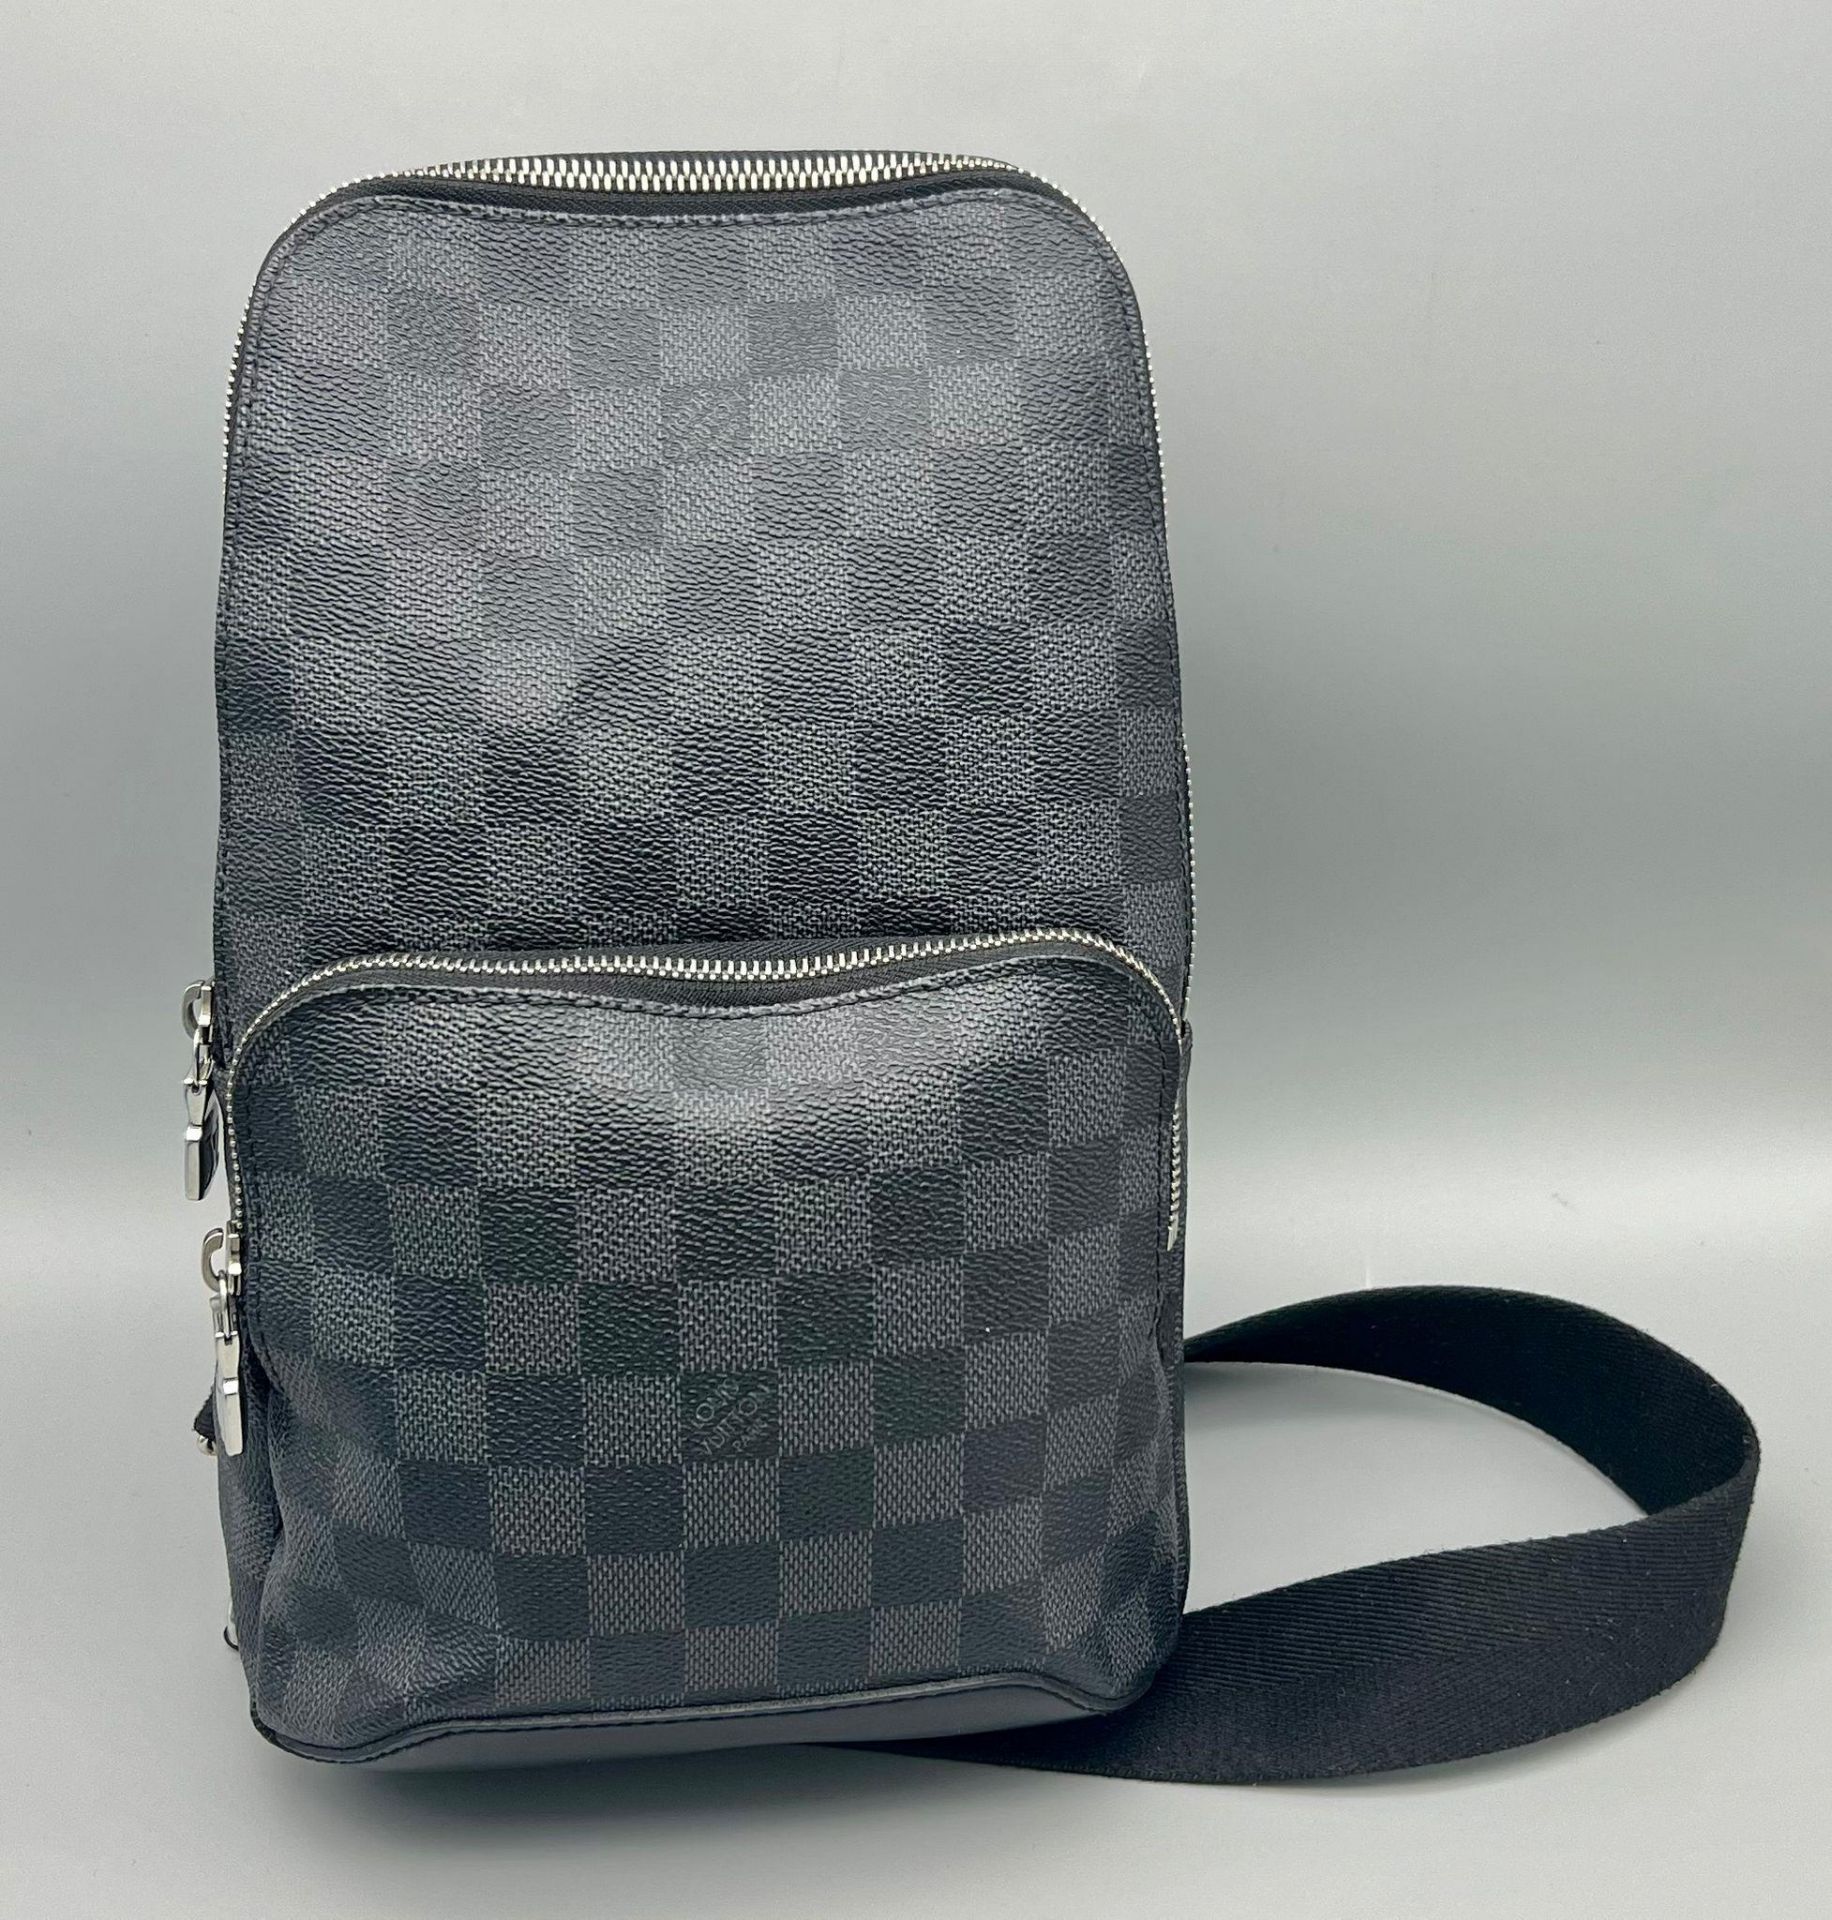 A Louis Vuitton Checked Canvas Messenger Bag. Silver-tone hardware. Zipped outer compartment.